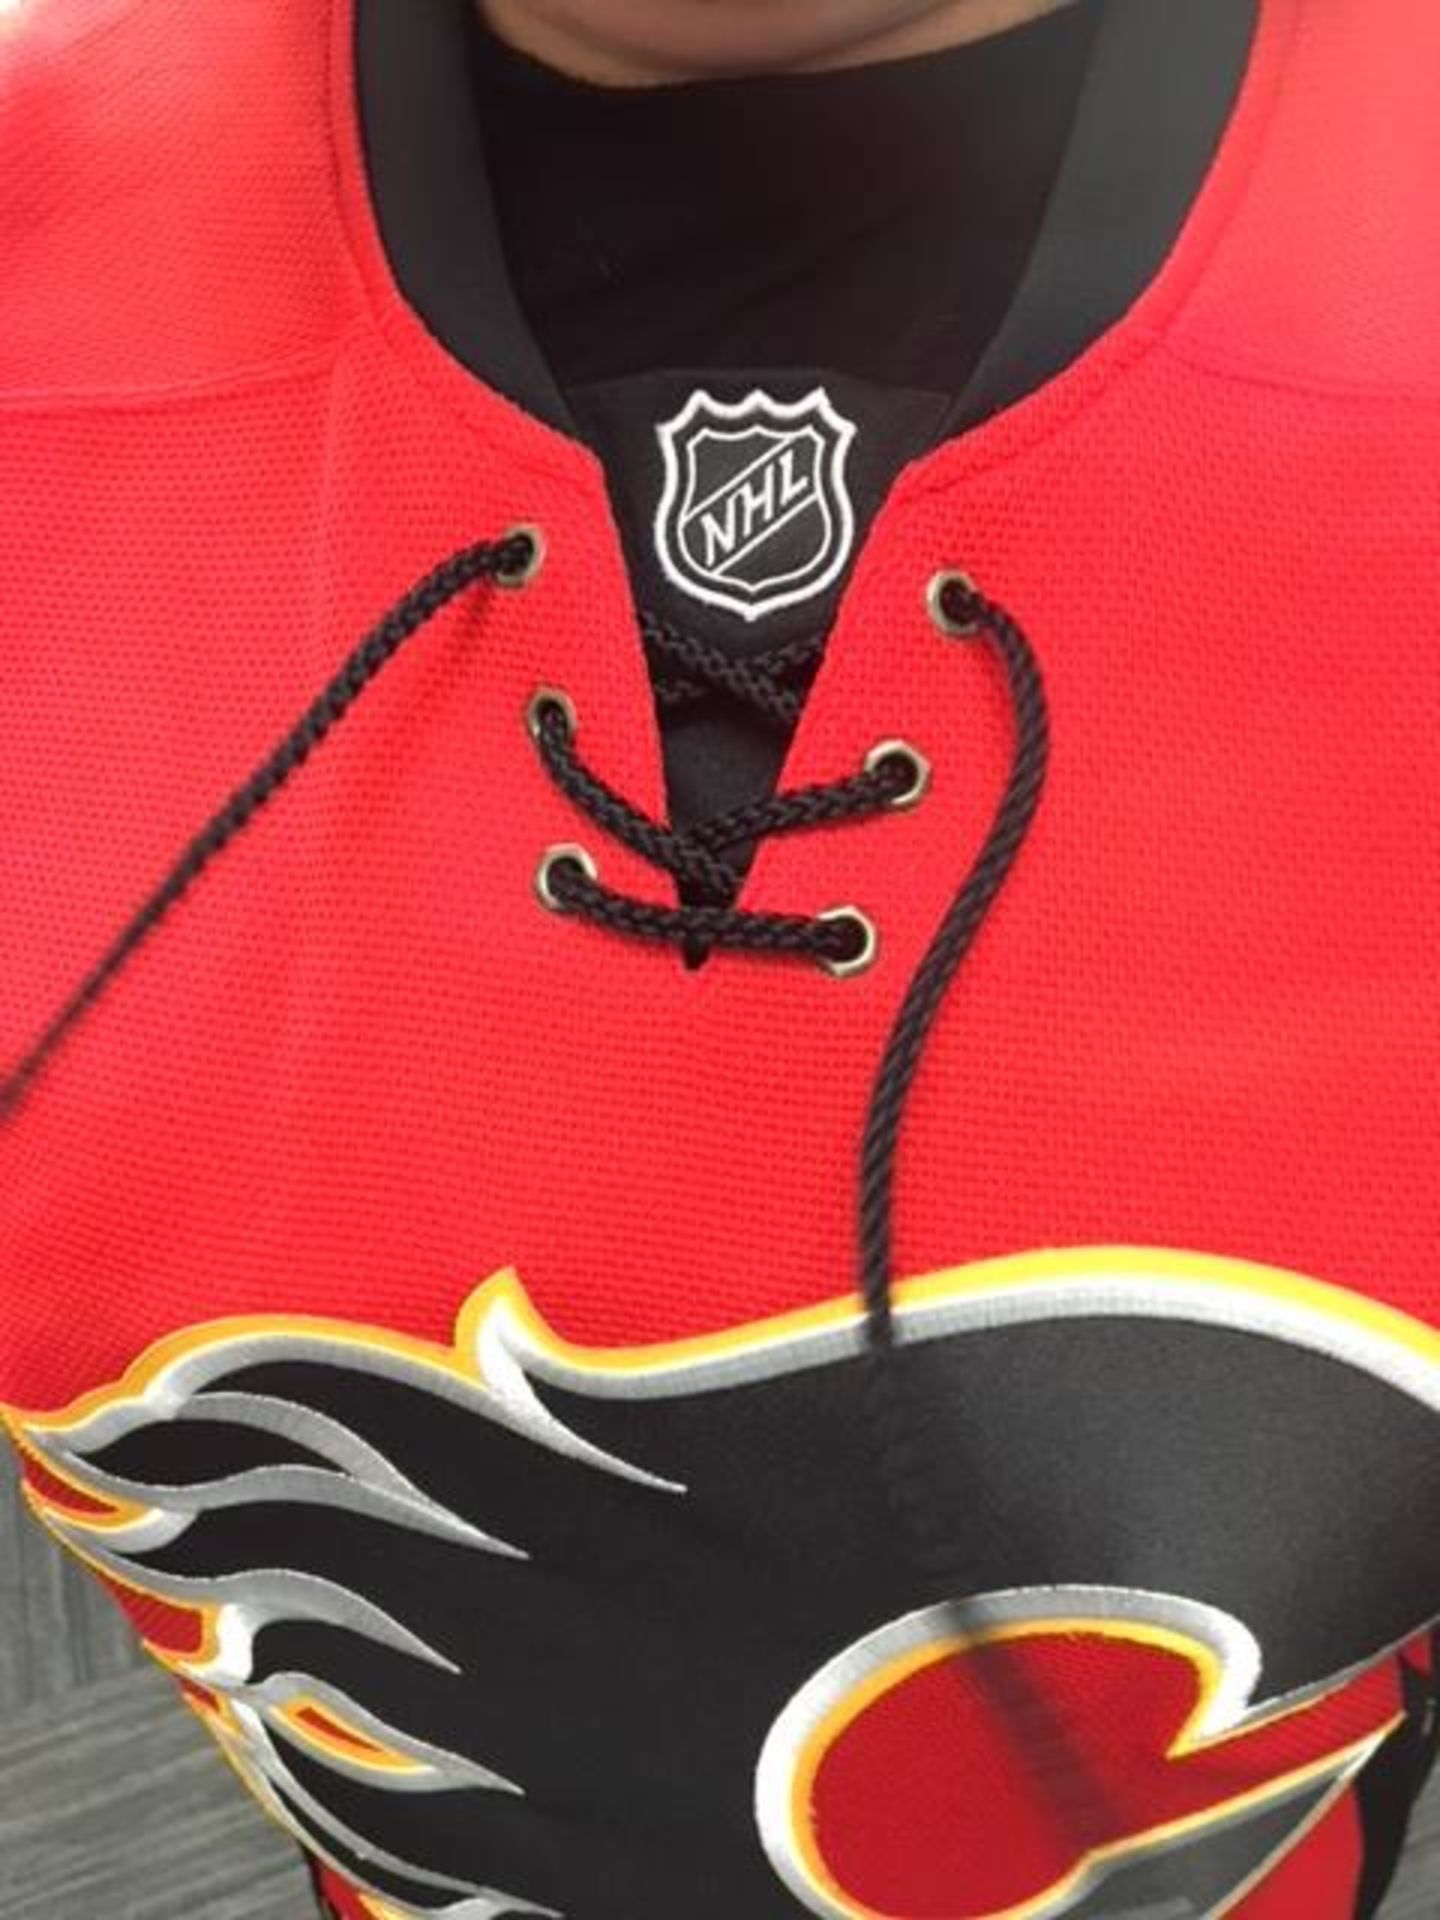 Calgary Flames #27 Jersey - Image 3 of 5